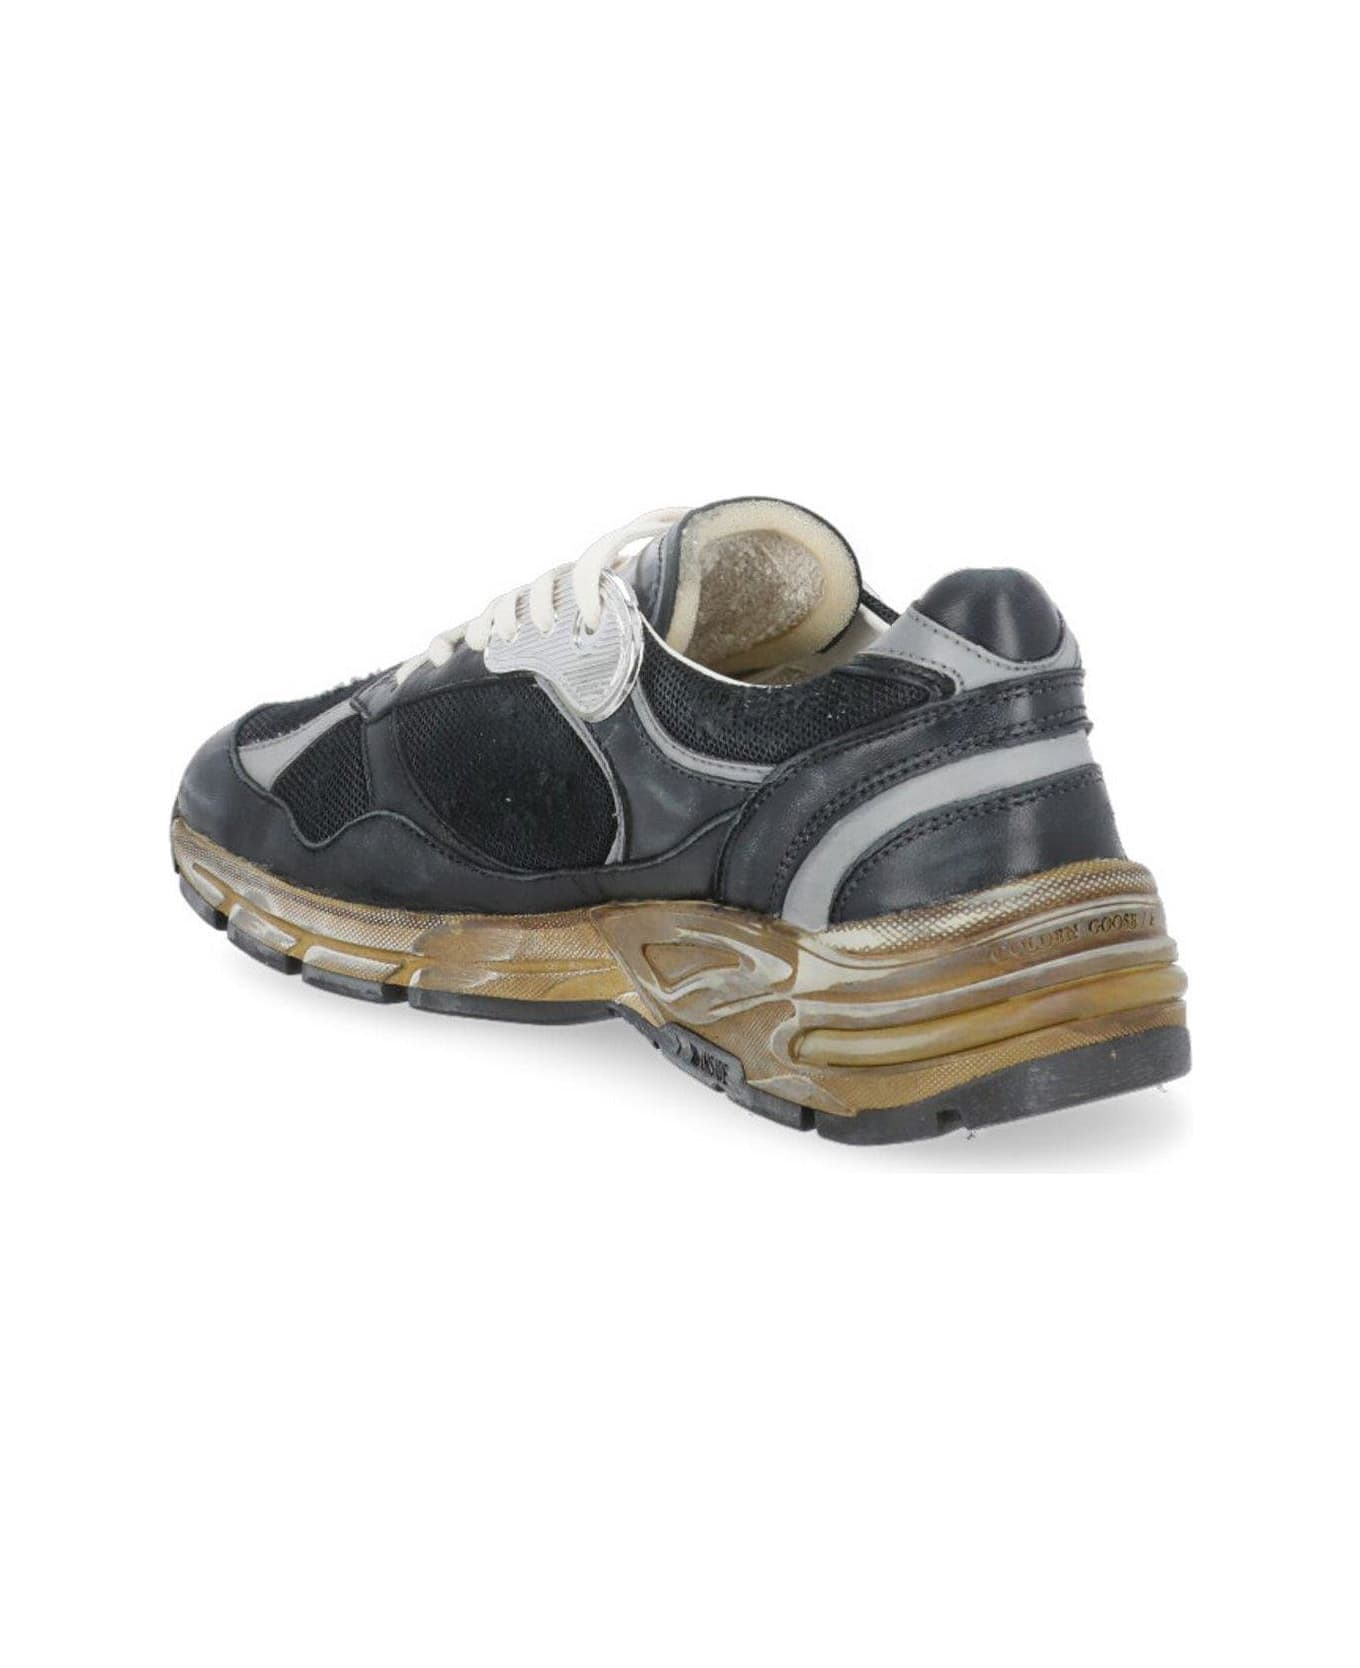 Golden Goose Running Dad Net Sneakers - Black/silver/ice スニーカー